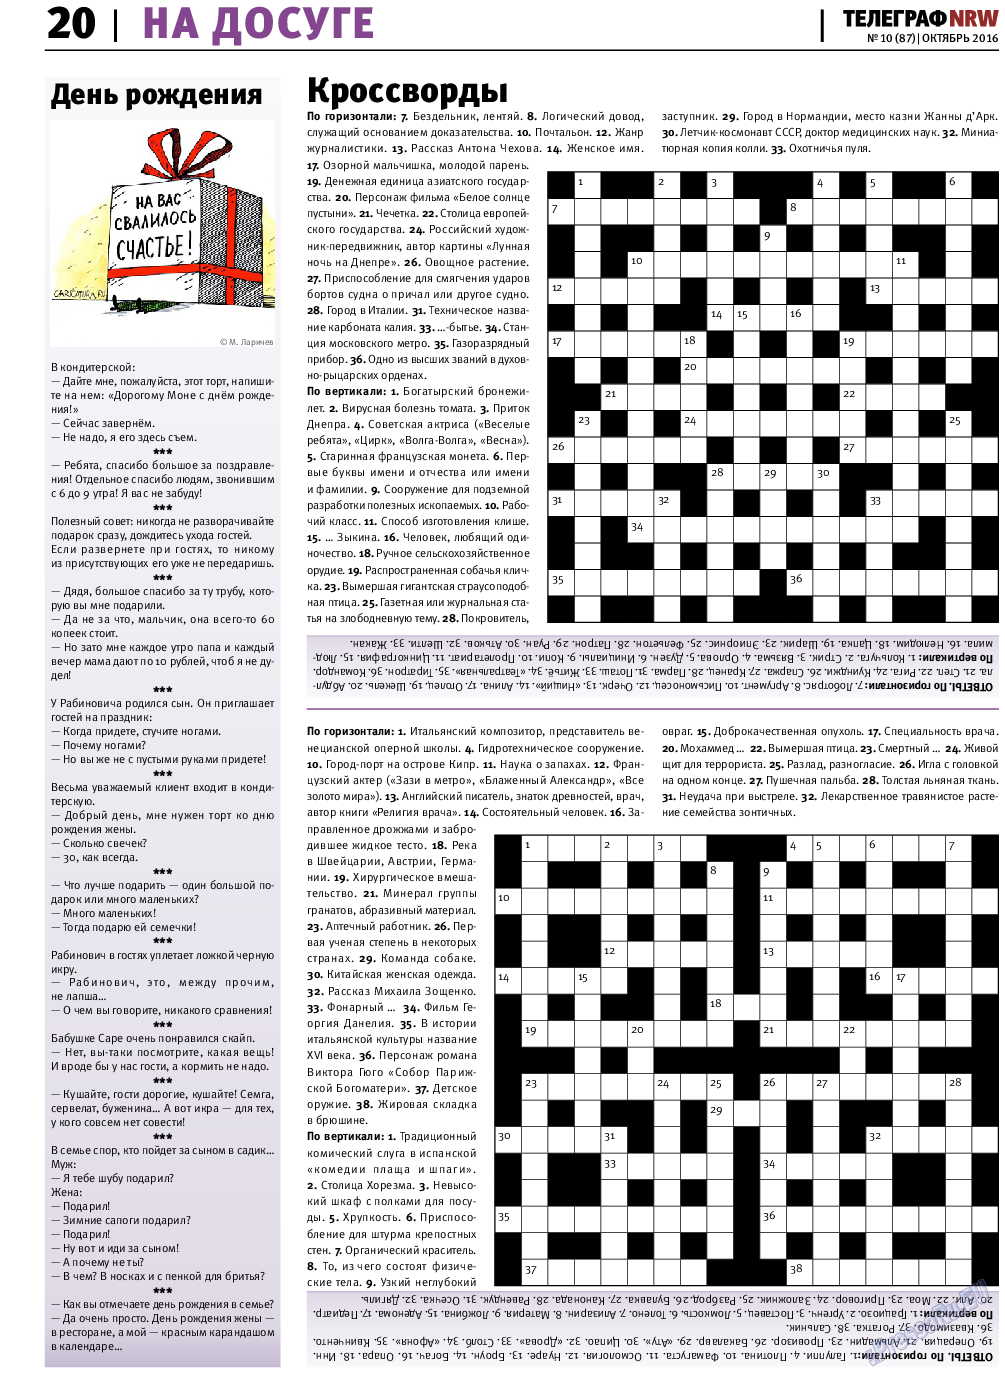 Телеграф NRW, газета. 2016 №10 стр.20